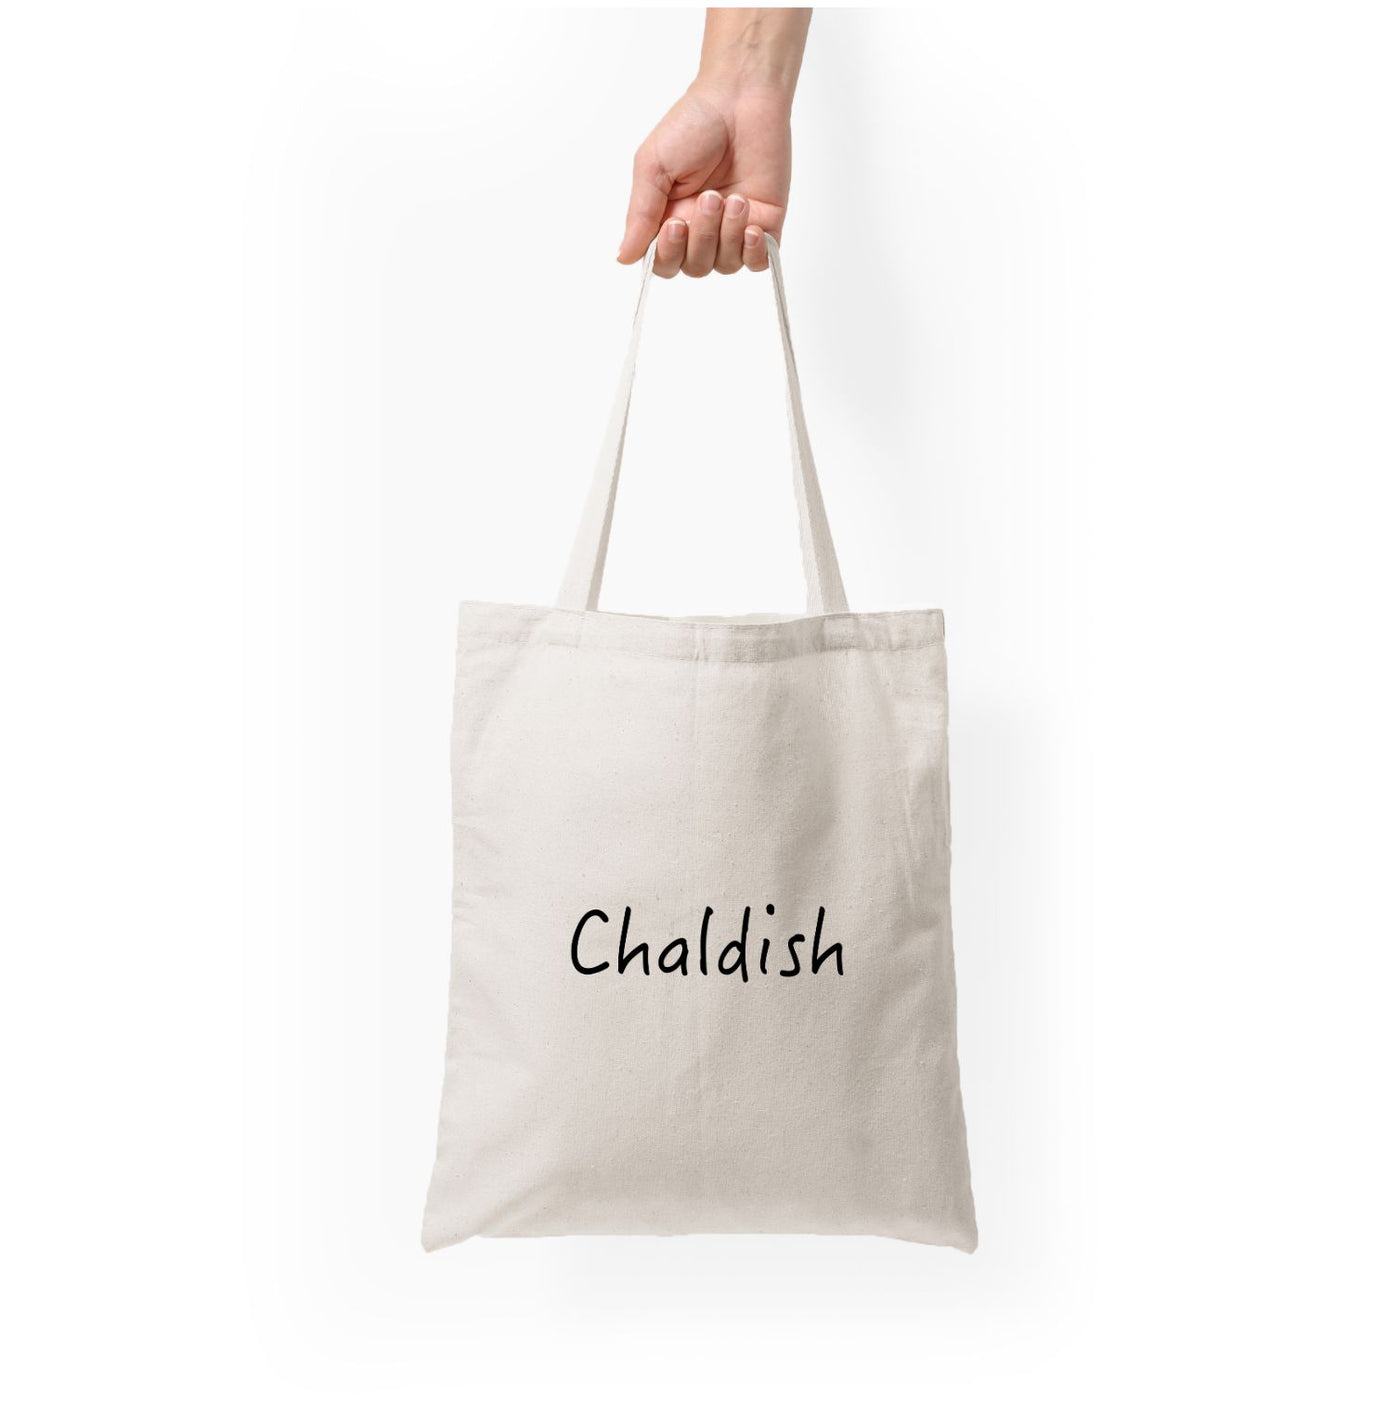 Chaldish - Islanders Tote Bag